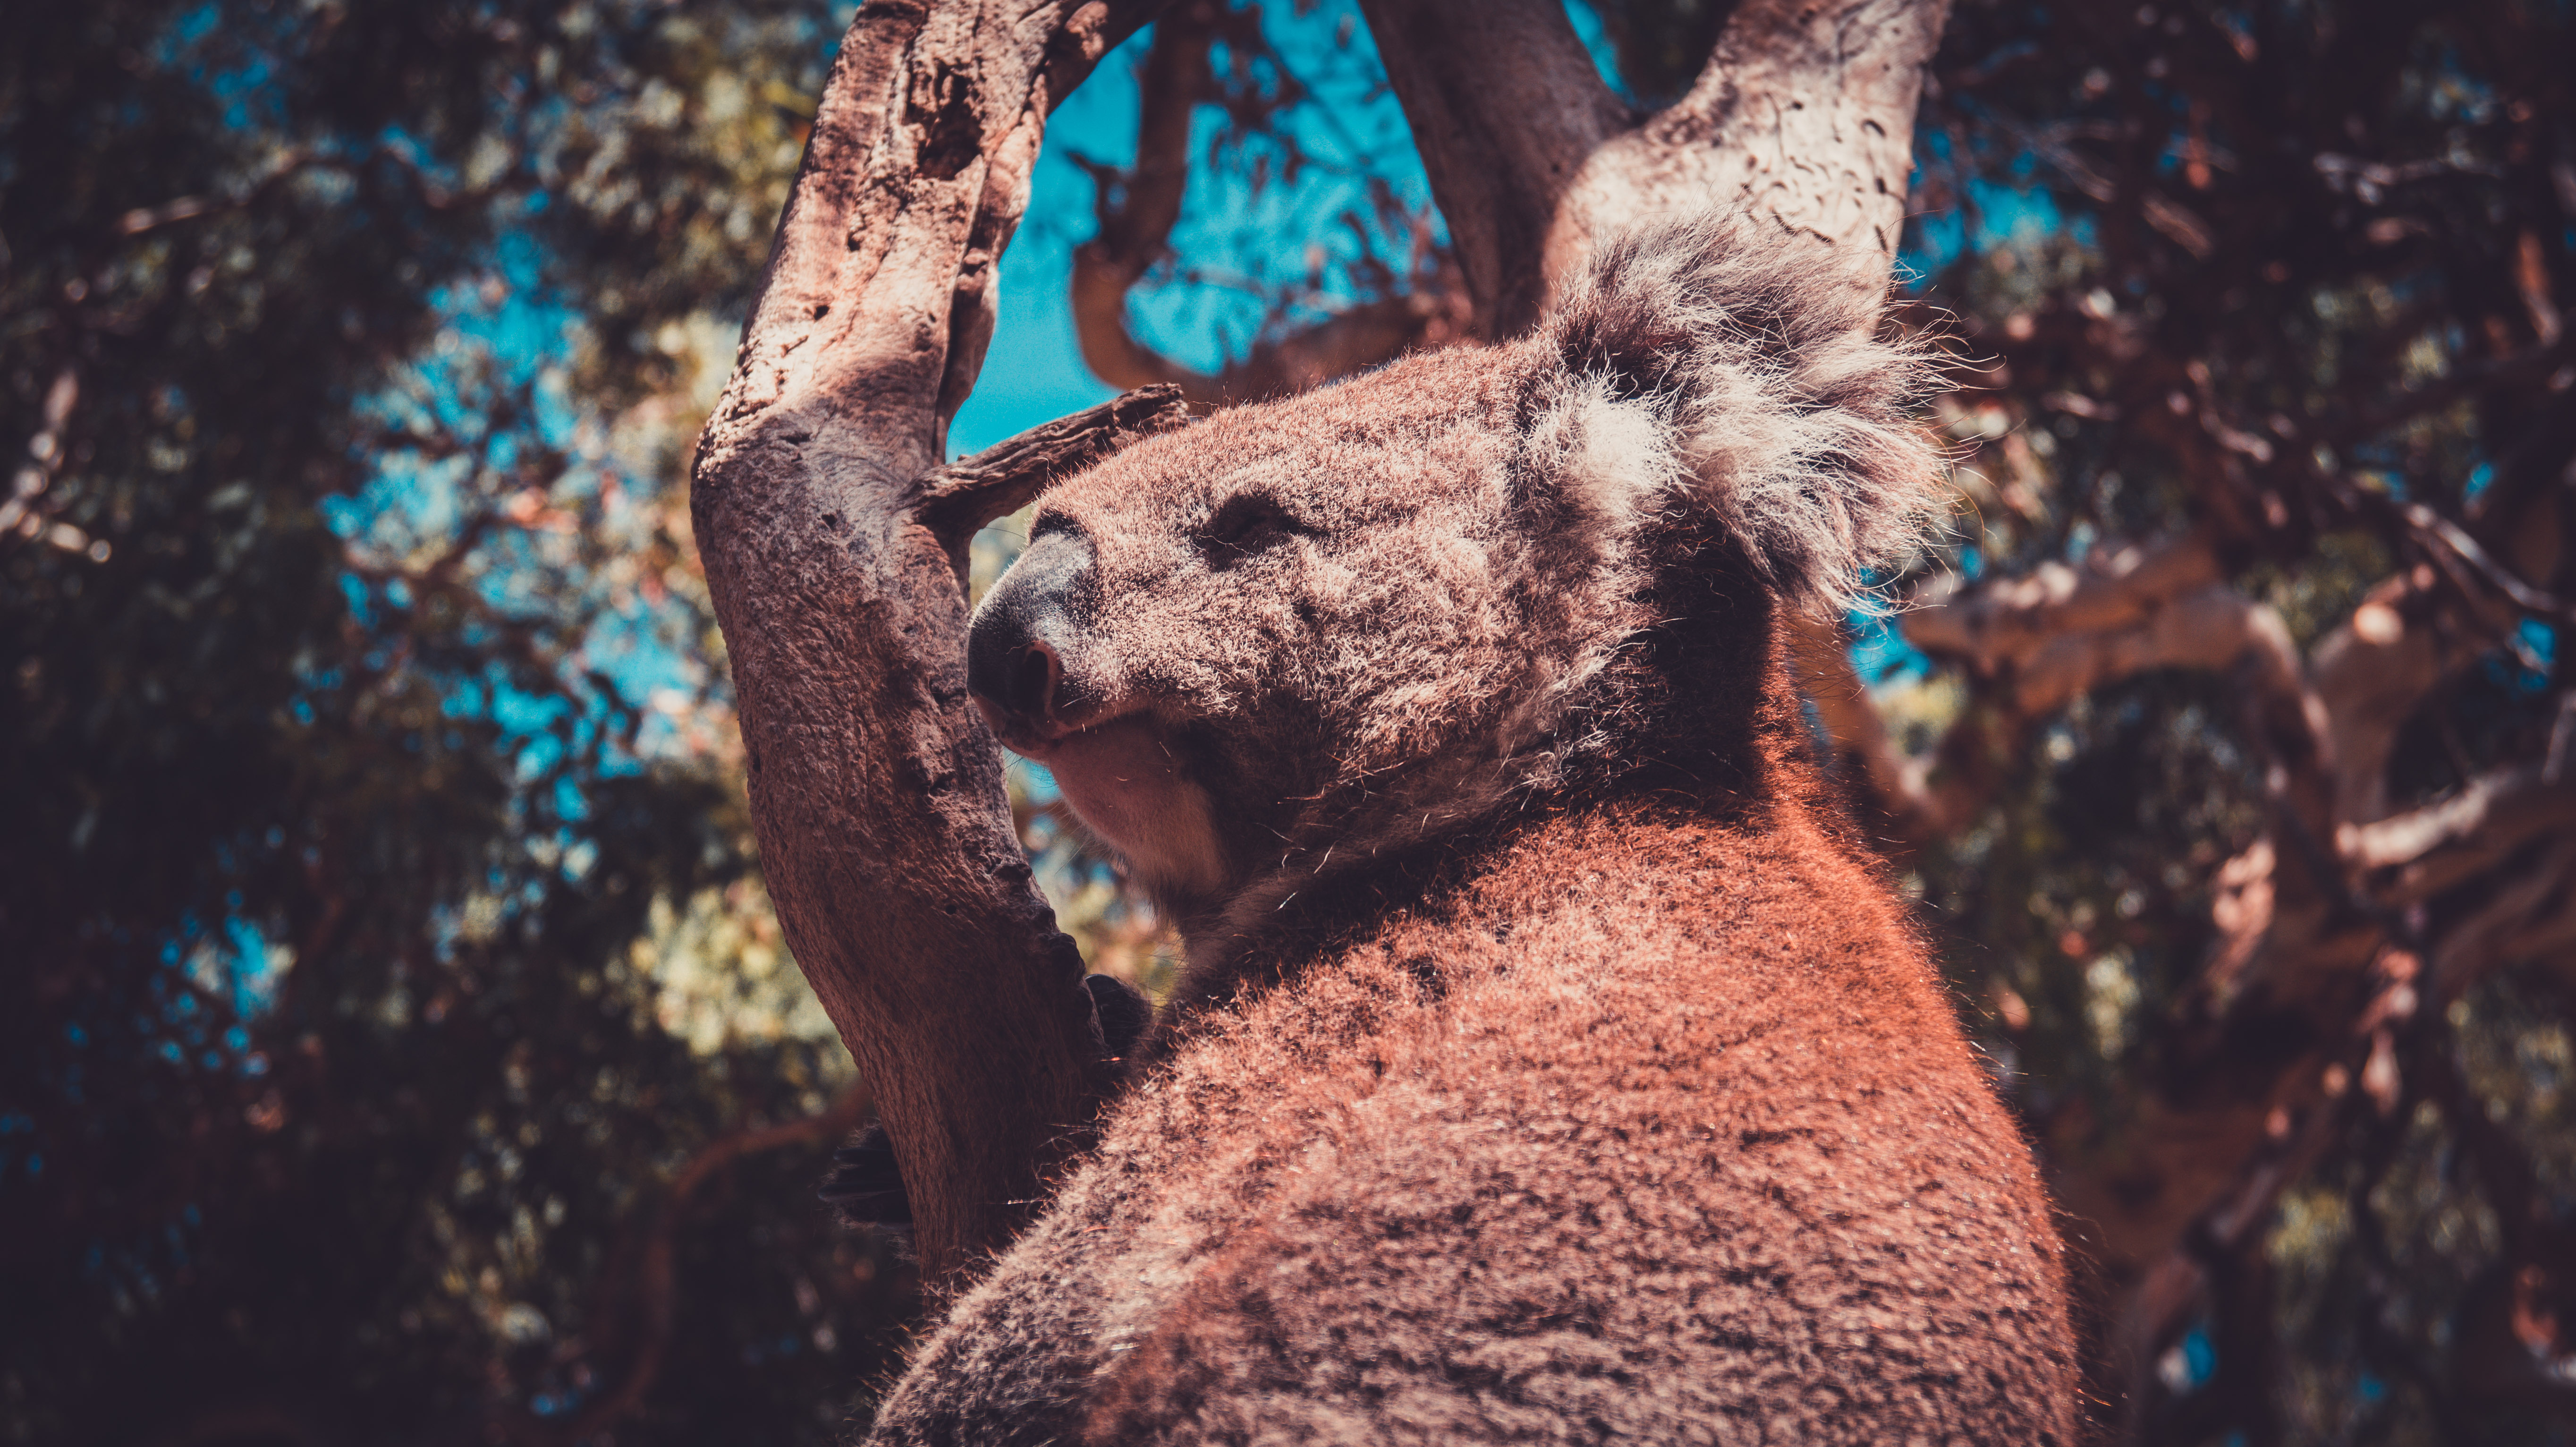 General 5456x3064 animals Australia koalas trees wildlife nature